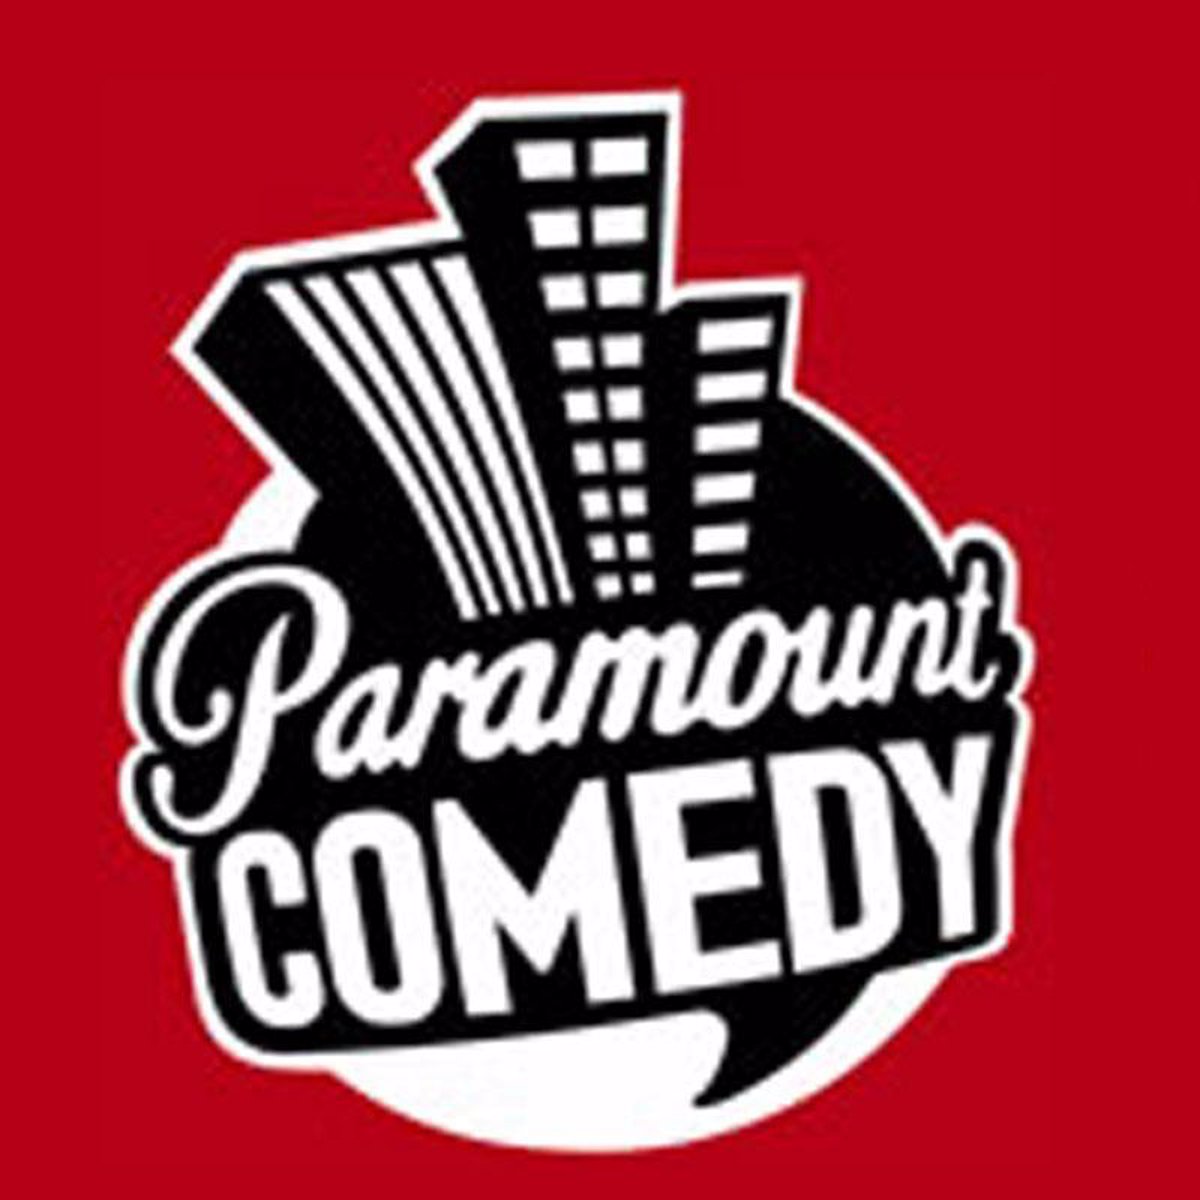 Парамаунт камеди большой. Парамаунт камеди. Телеканал Paramount comedy. Paramount comedy заставки. Paramount comedy Украина.